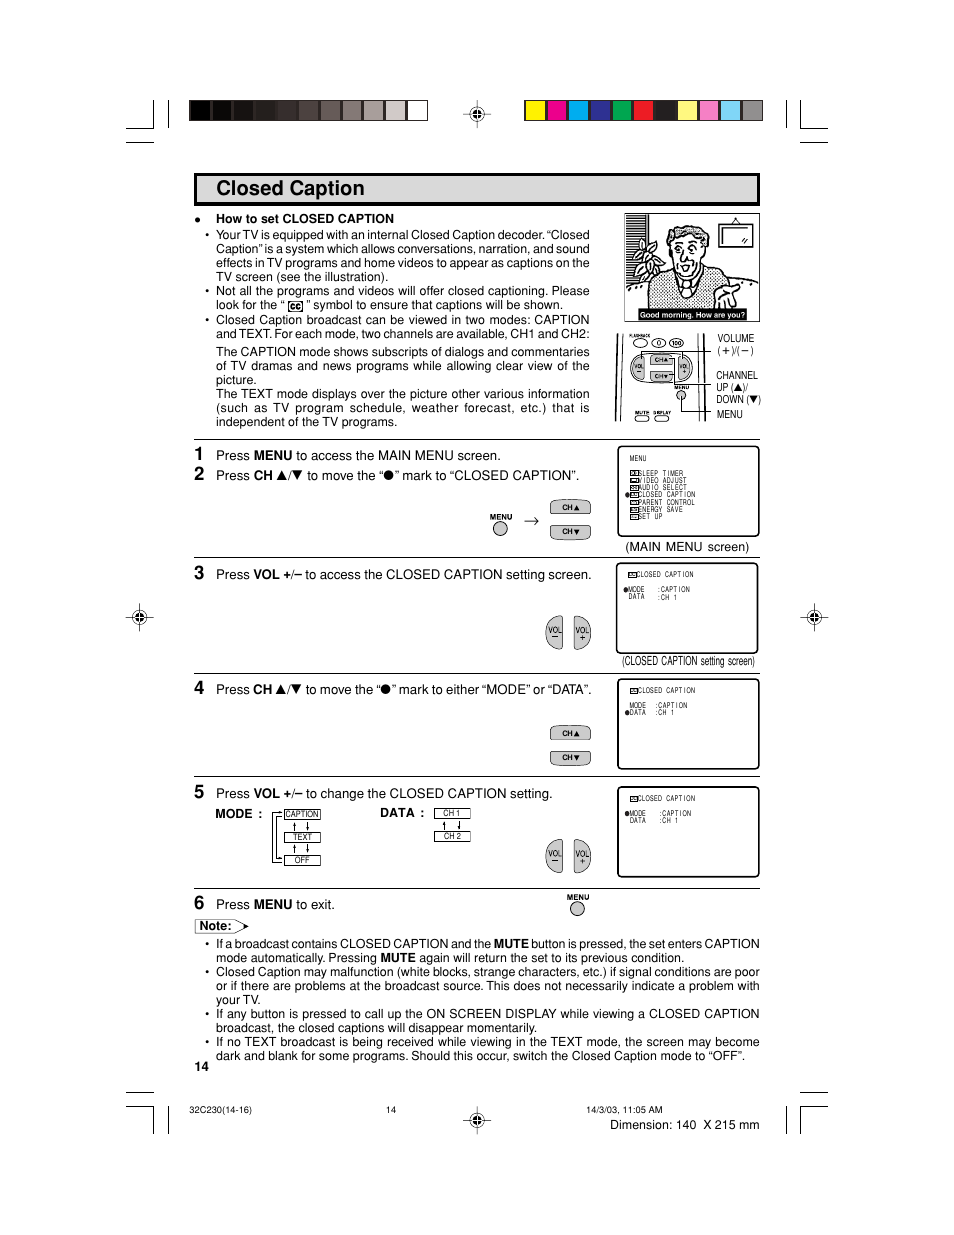 Closed caption | Sharp 32C230 User Manual | Page 14 / 52